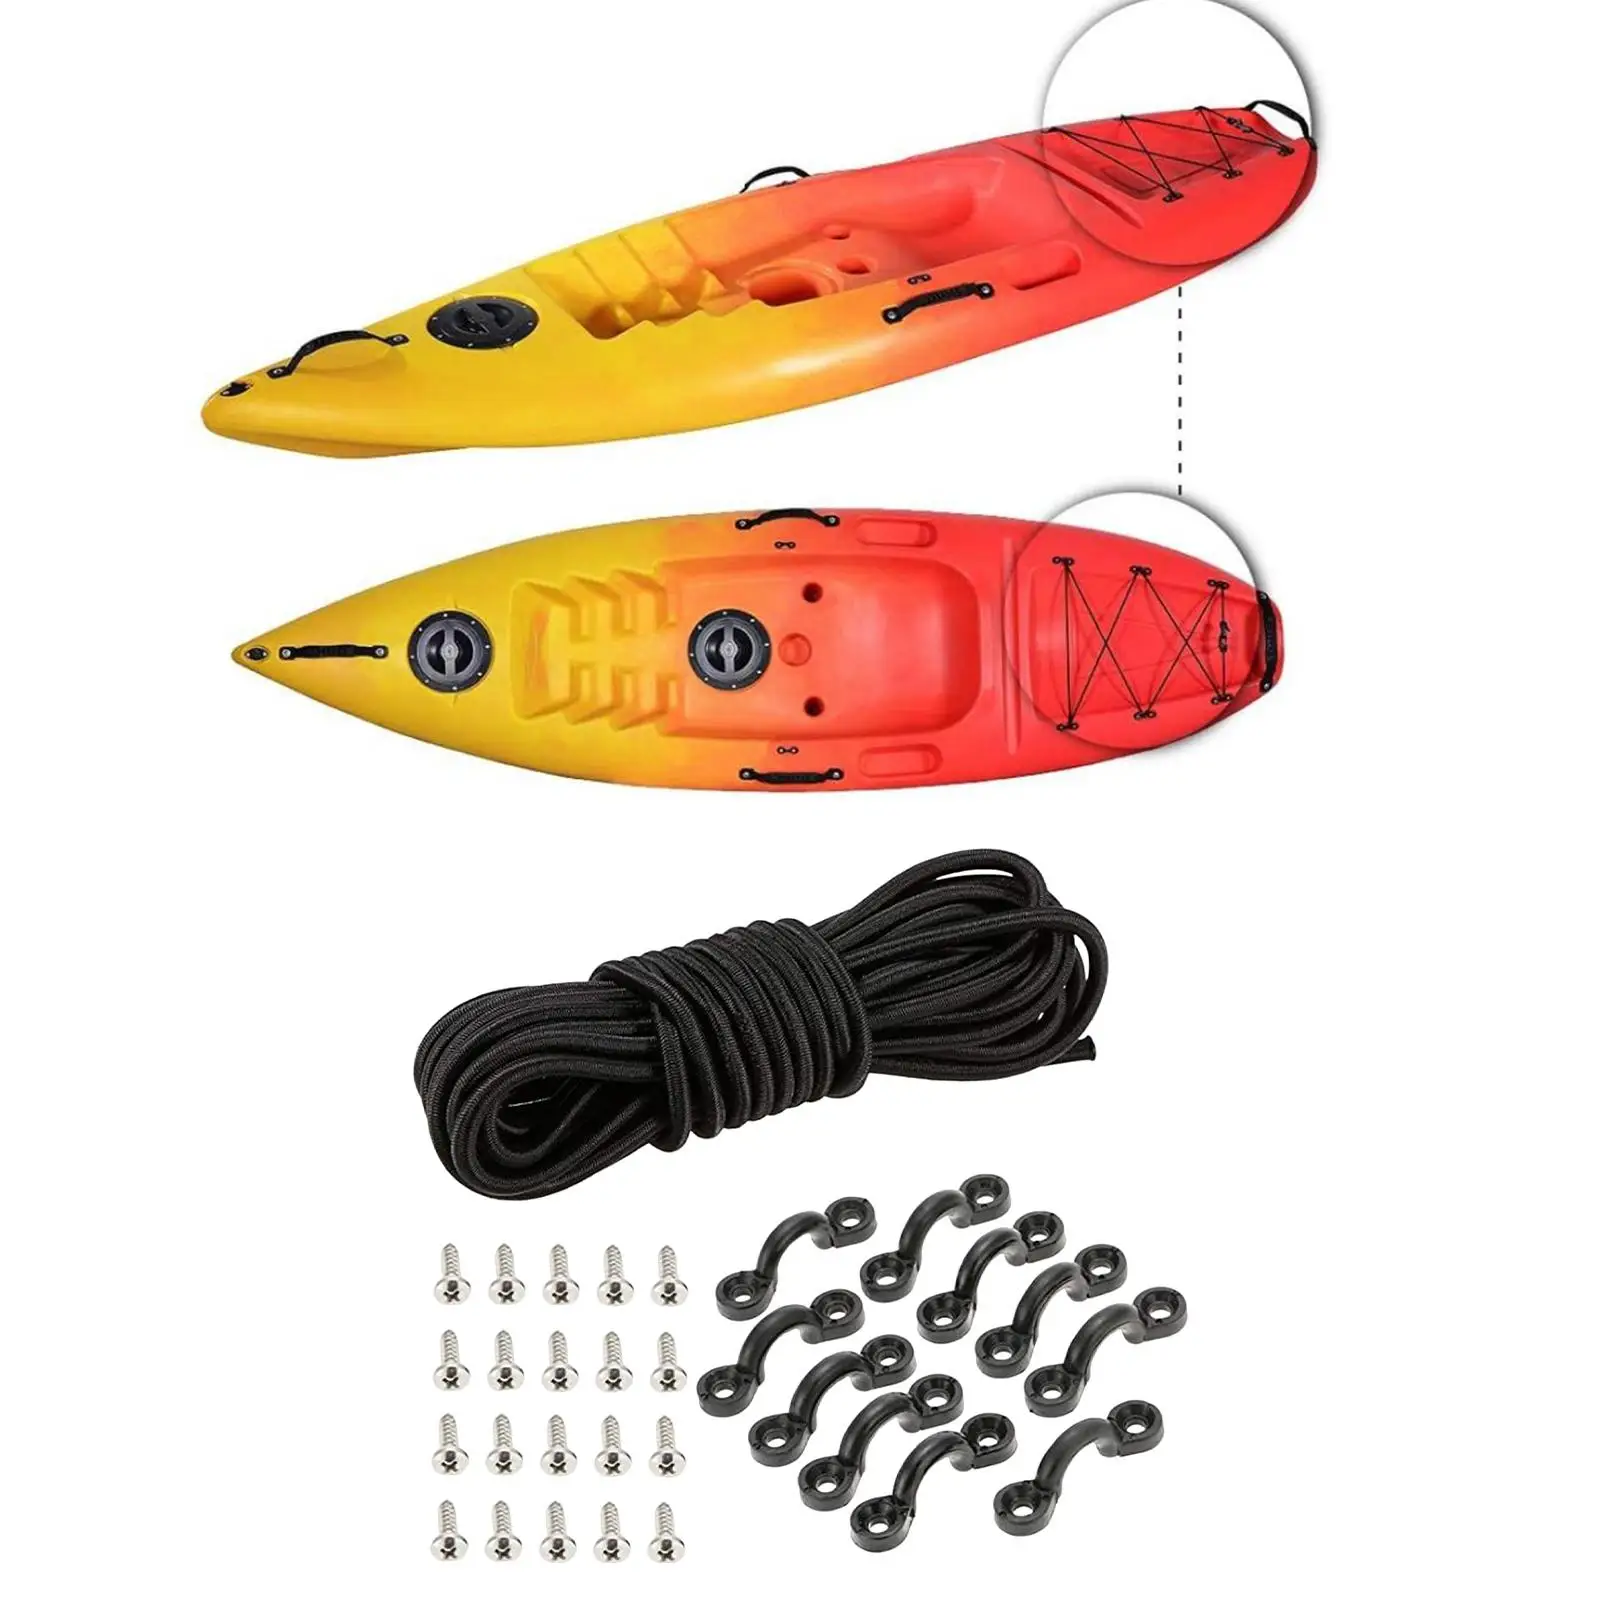 Kayak Deck Rigging Kit C Shaped Buckles with Screws 5 Meters Bungee Cord Fishing Storage Bungee Kit for Camping Canoe Kayak Boat